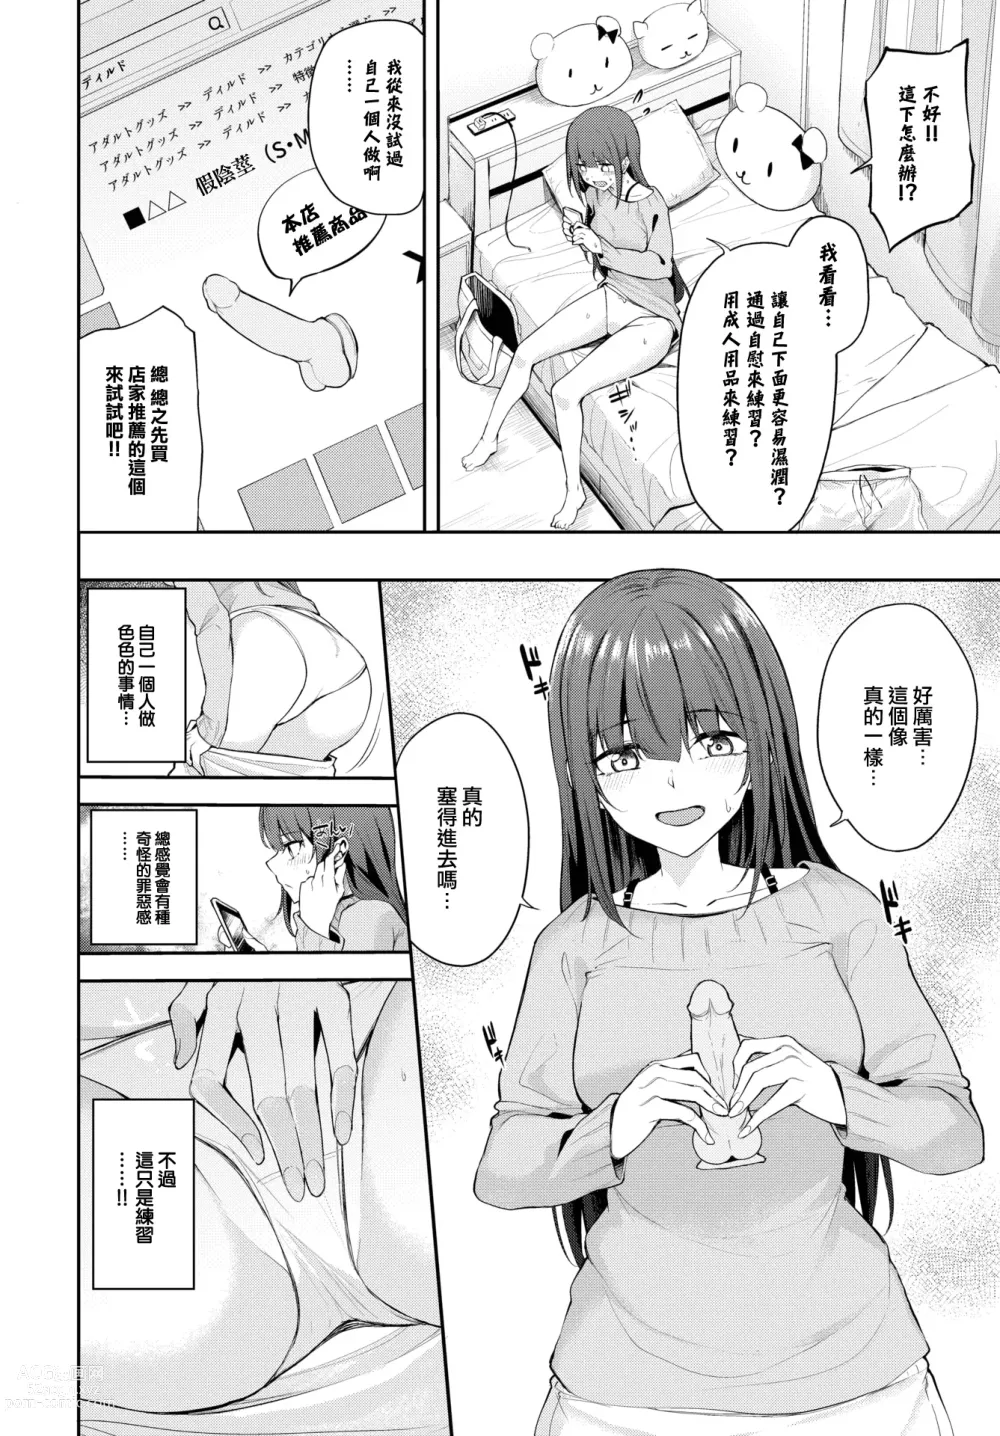 Page 5 of manga Otome no Kigakari